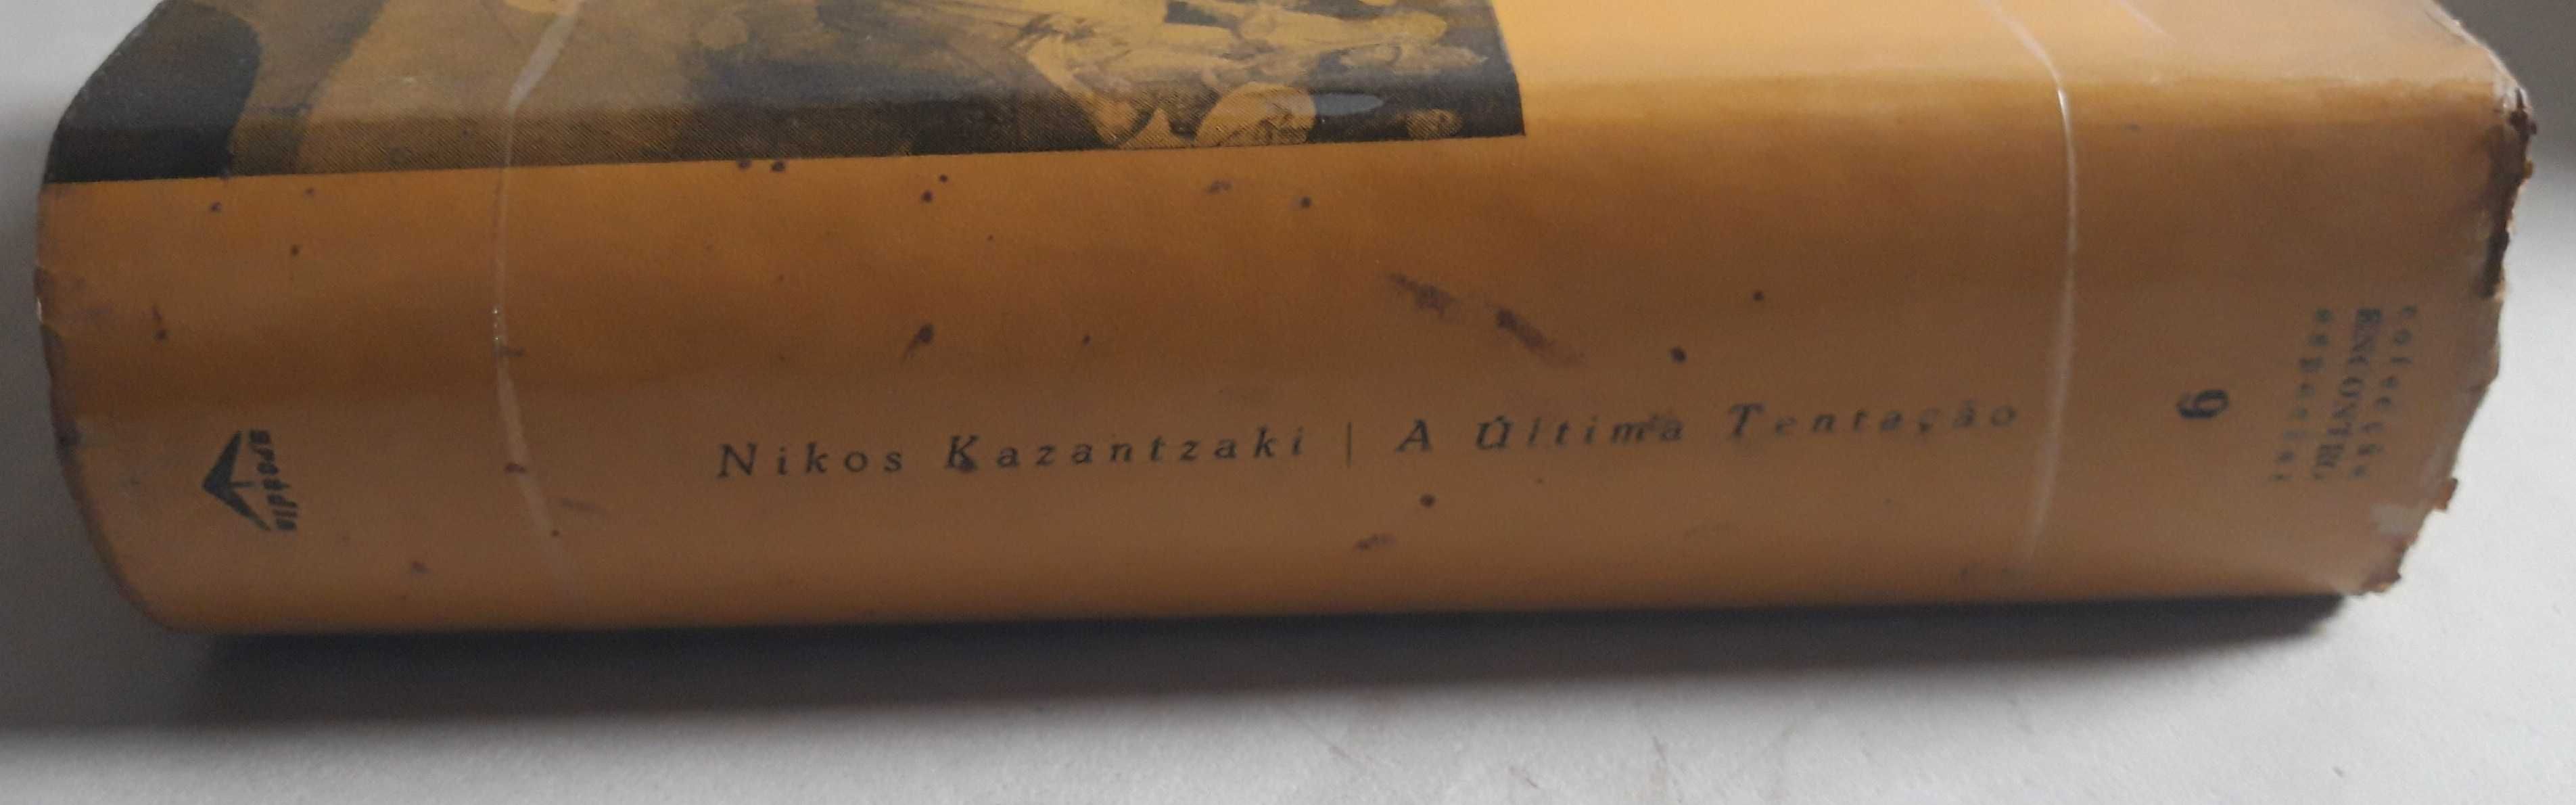 Livro  Ref Cx B- Nikos Kazantzaki - A Última Tentação